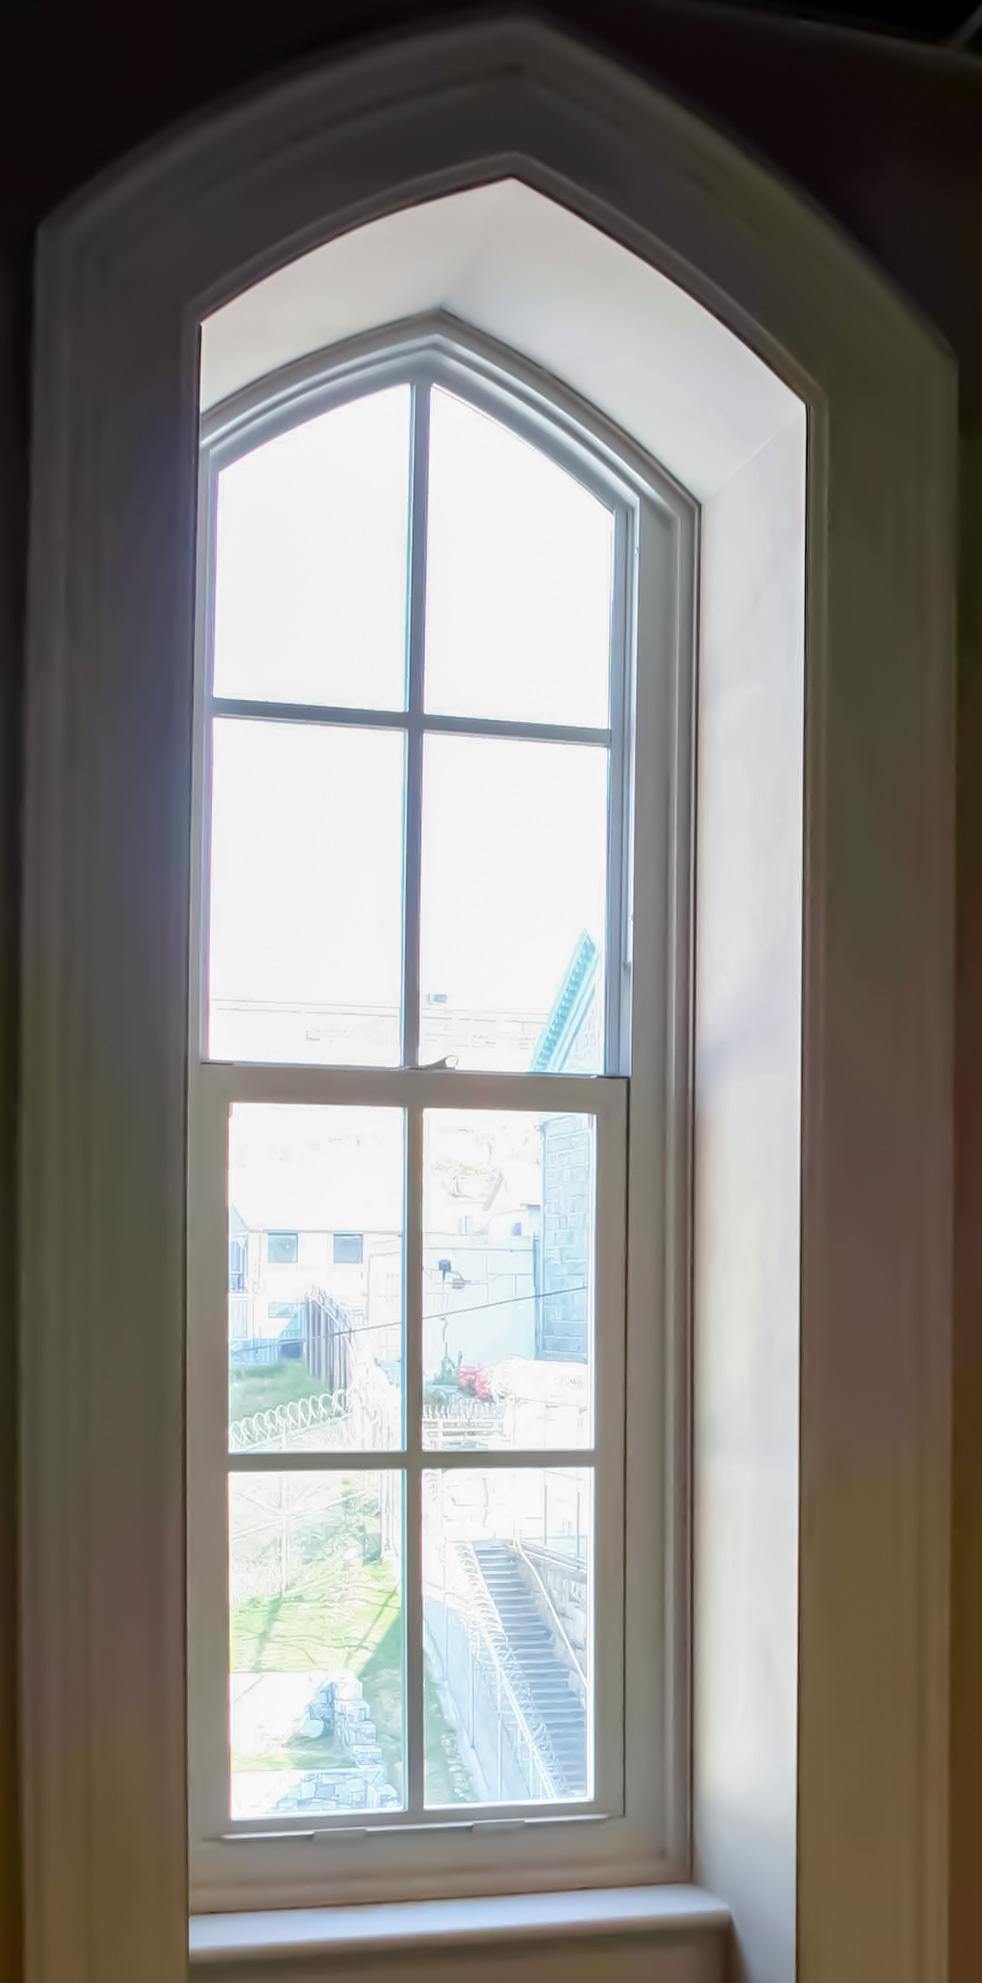 An interior image of a window utilizing interior snap trim.